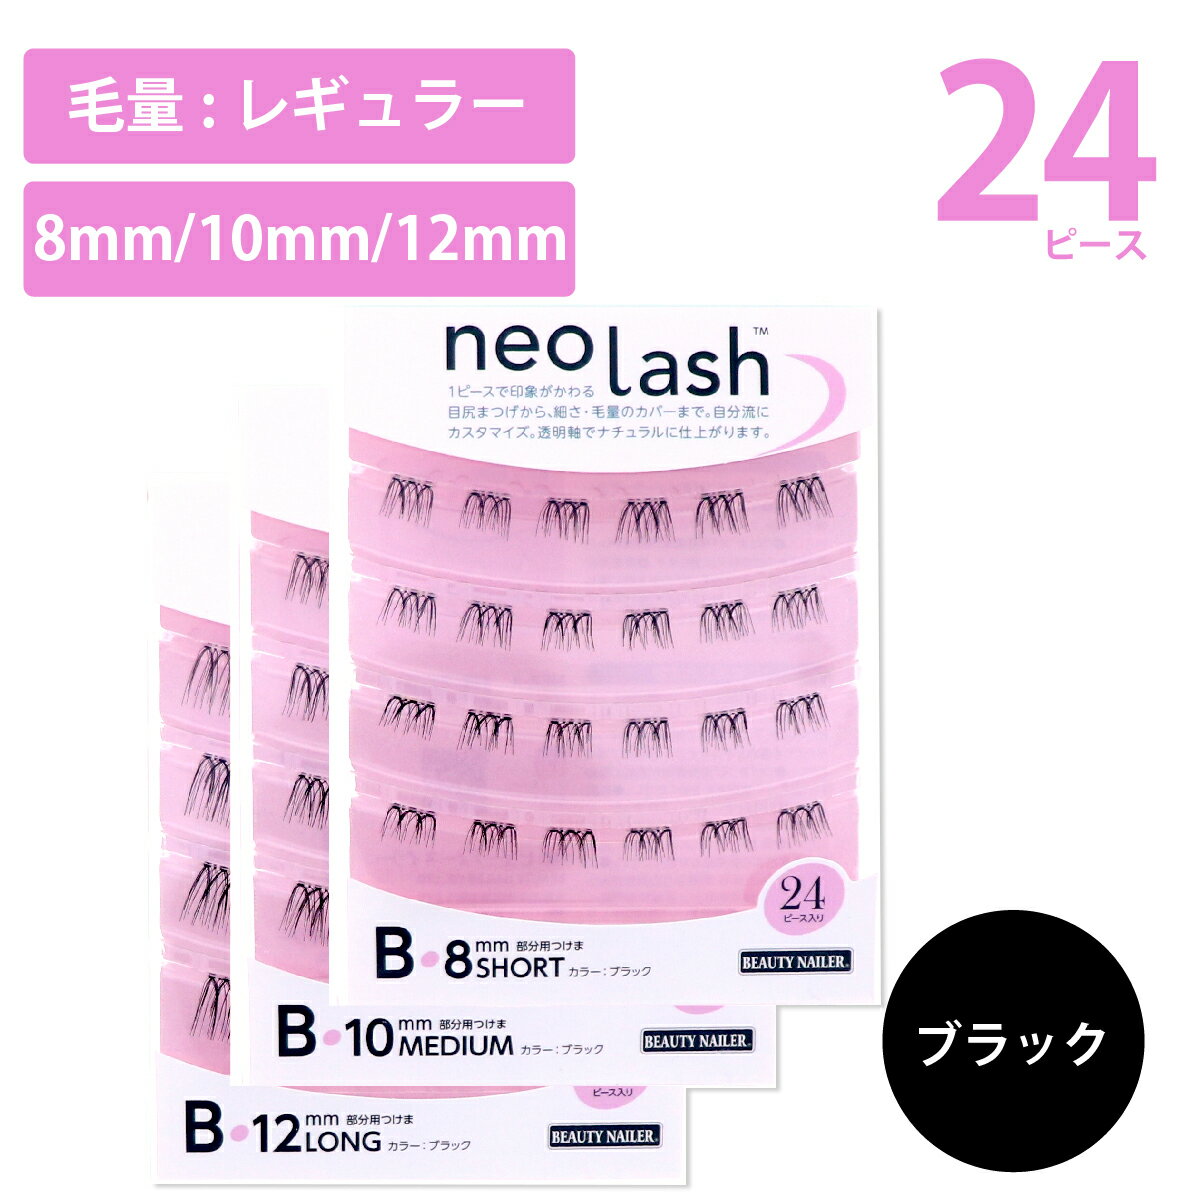 neo lash ネオラッシュ Bタイプ 3種類 24ピース 毛量ミディアム ブラック Short Medium Long 8mm 10mm 12mm 部分用つ…